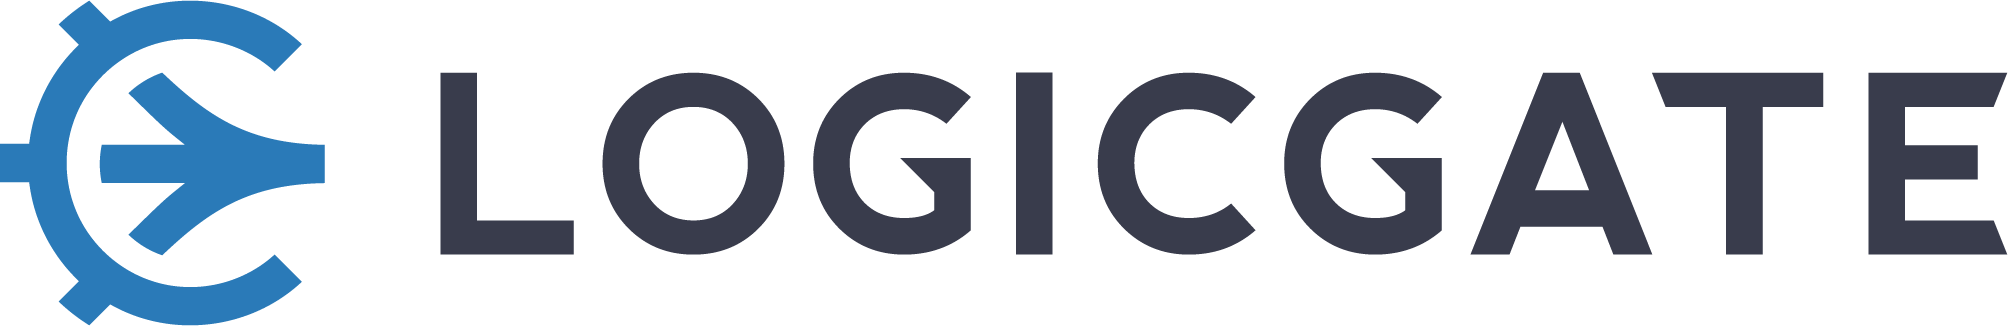 logicgate_logo_high_res